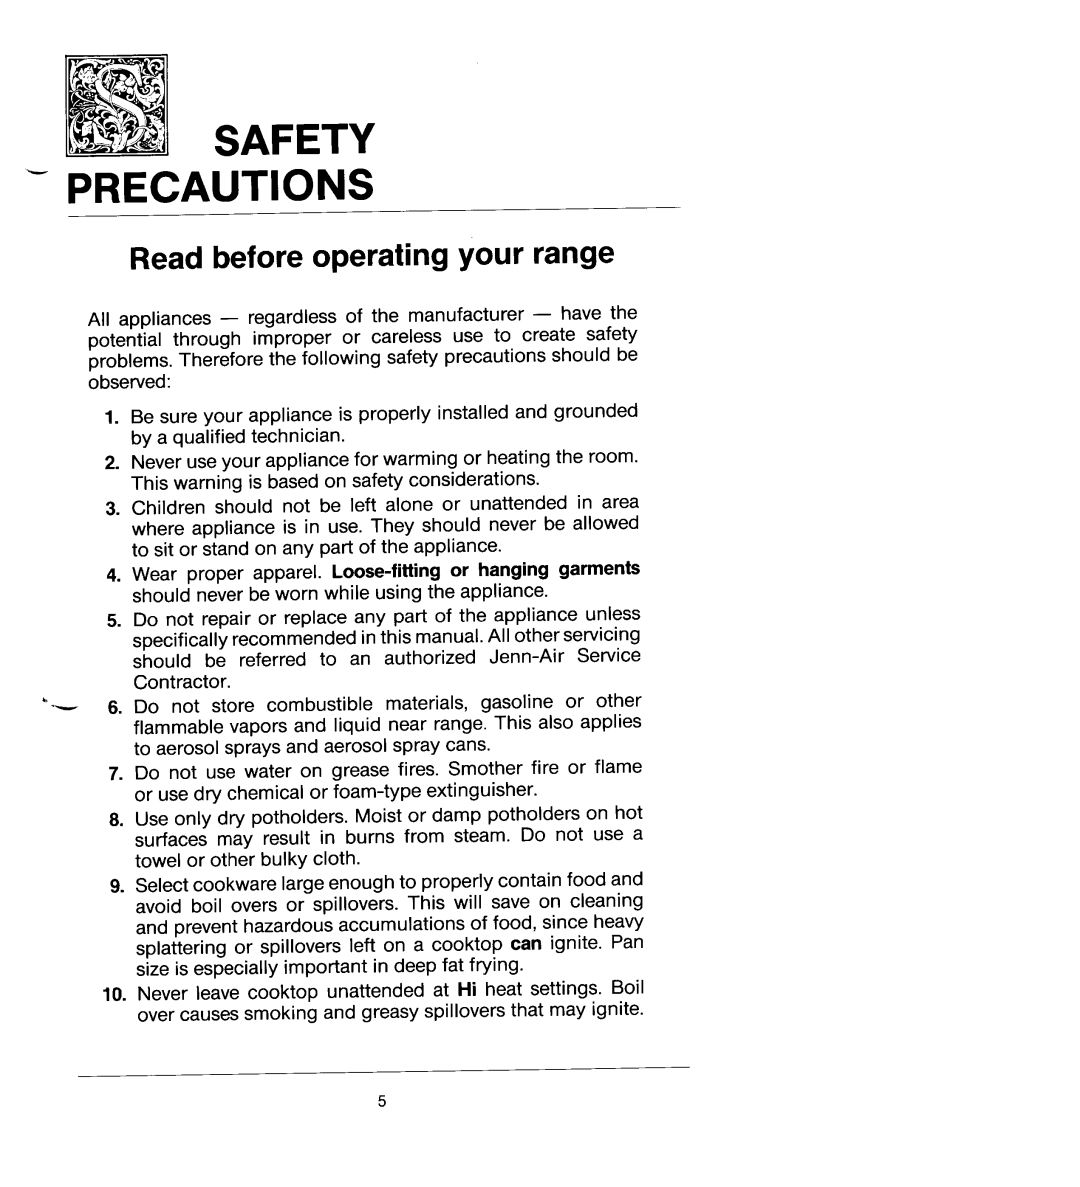 Jenn-Air SEG196 manual Read before operating your range, Safety, Precautions 